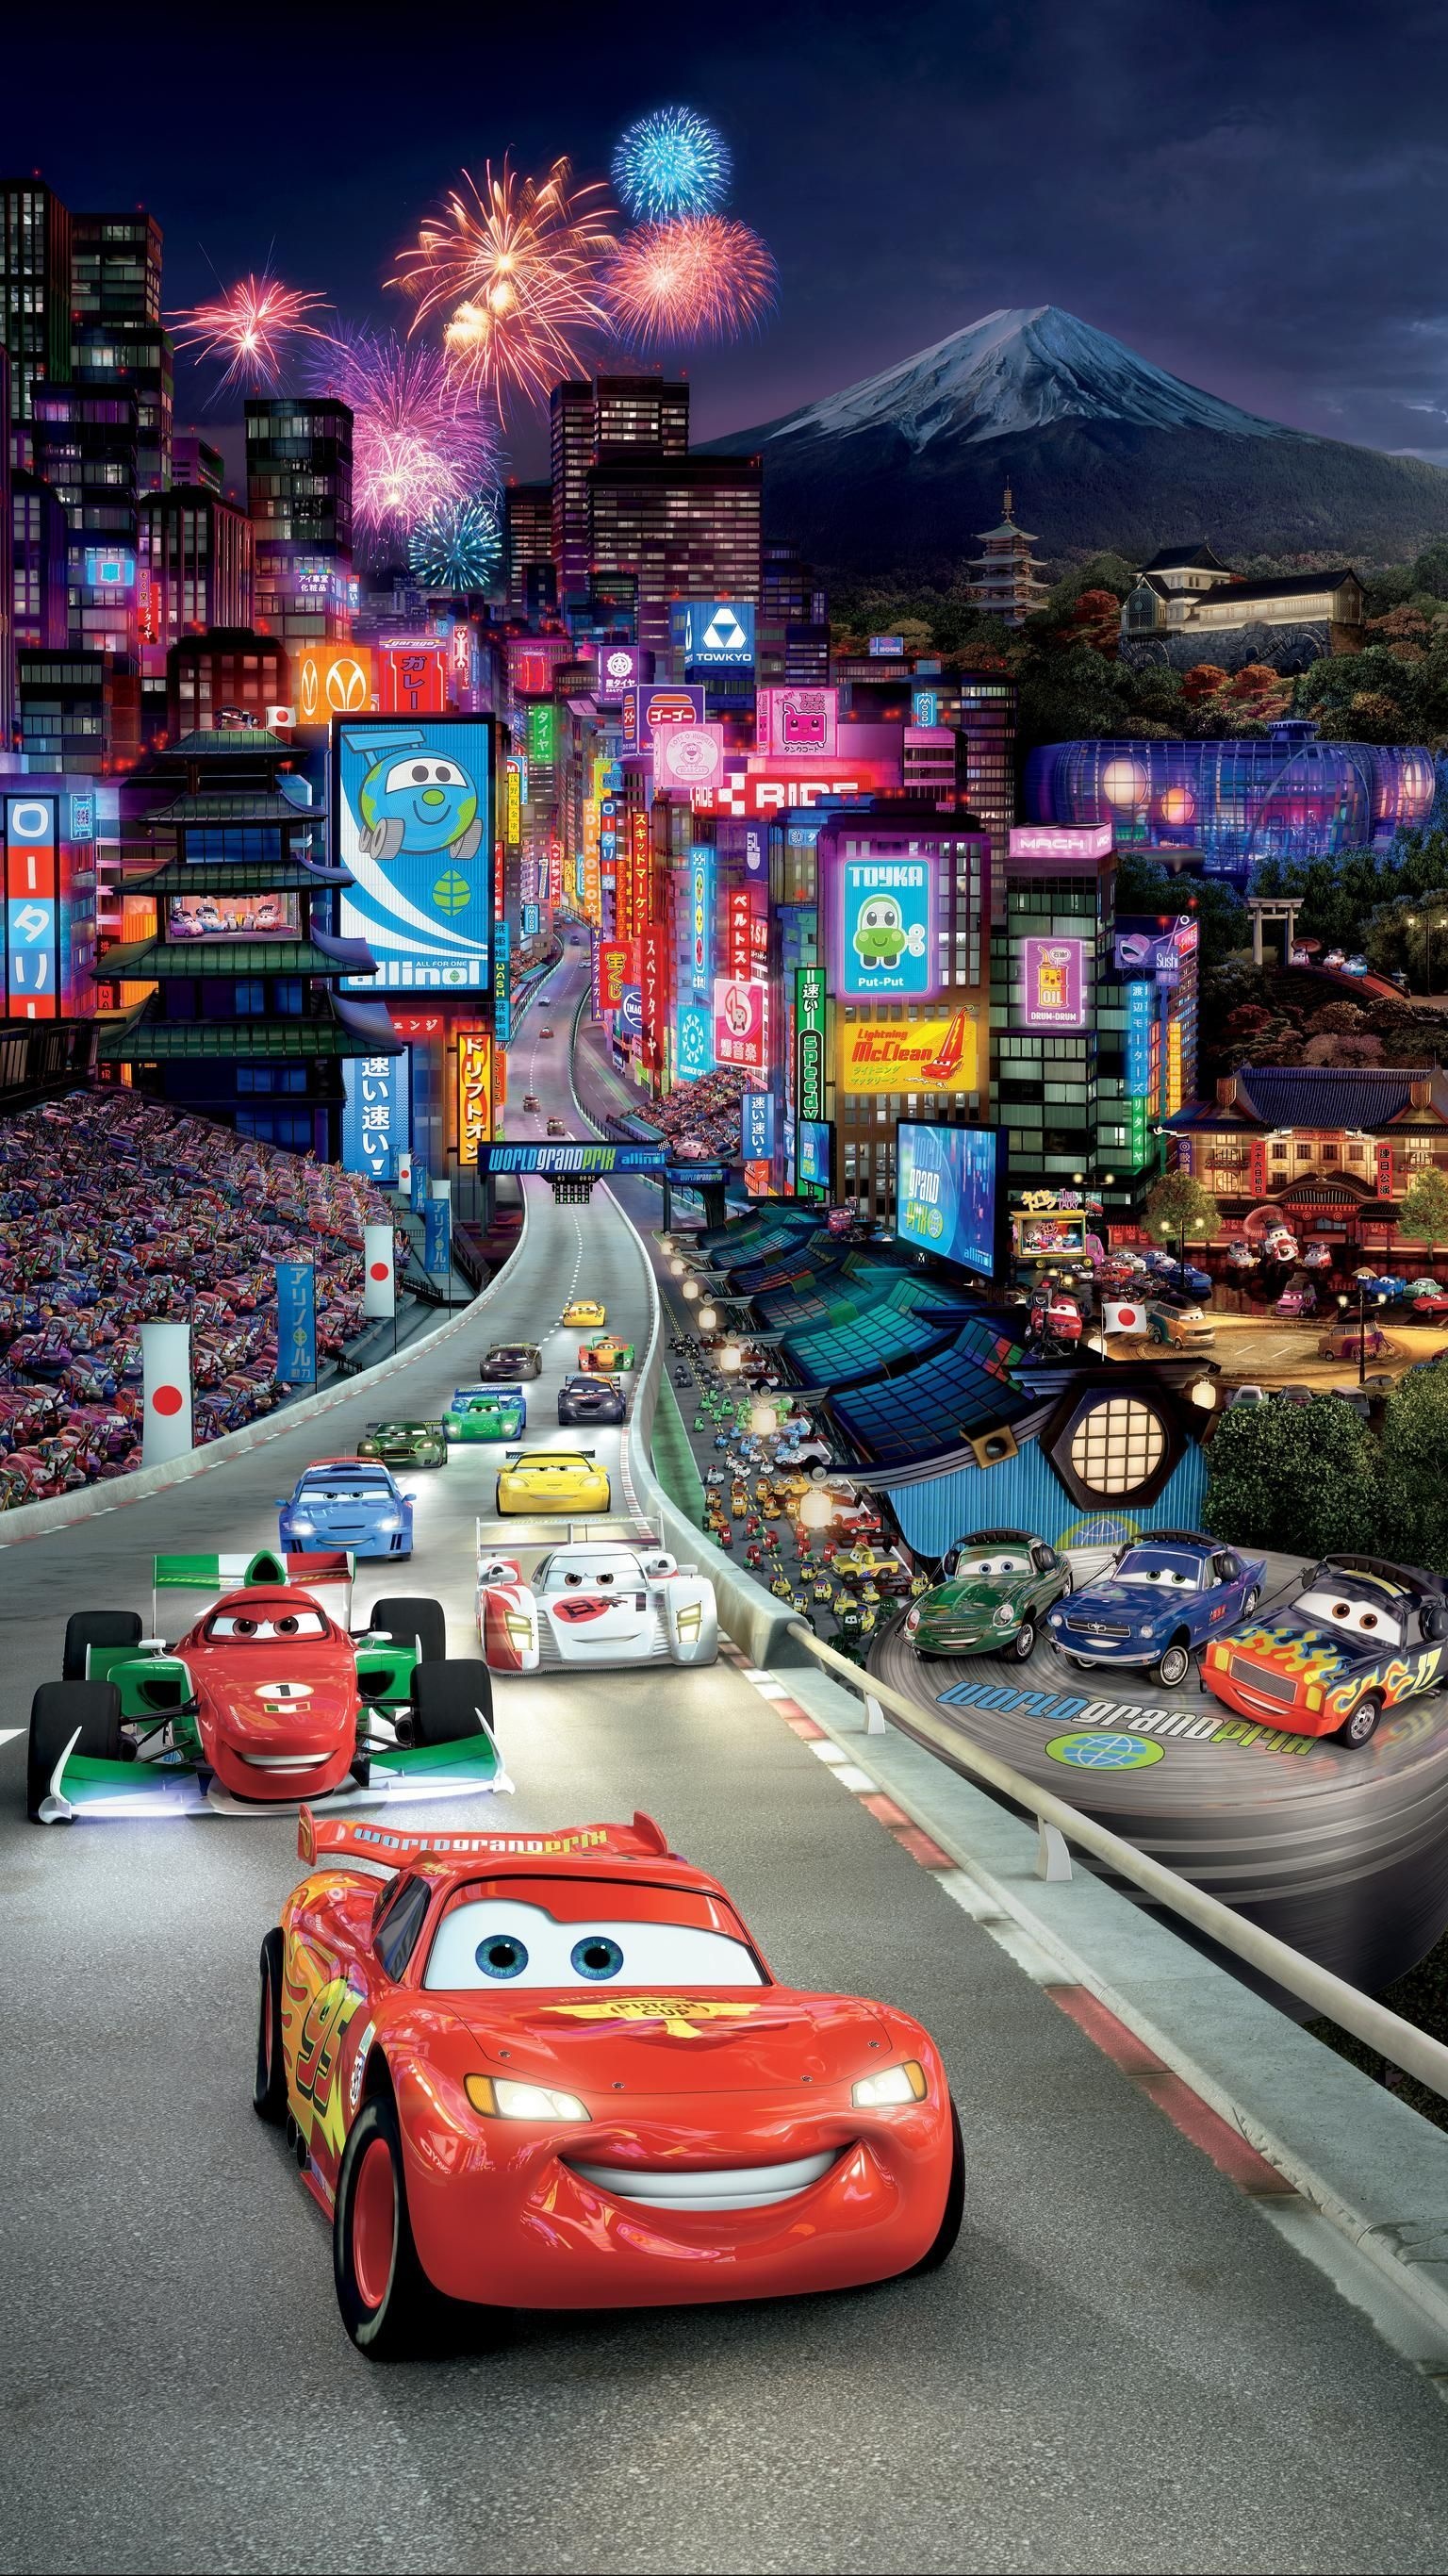 Cars (Disney): Cars 2, a 2011 American computer-animated spy comedy film. 1540x2740 HD Wallpaper.